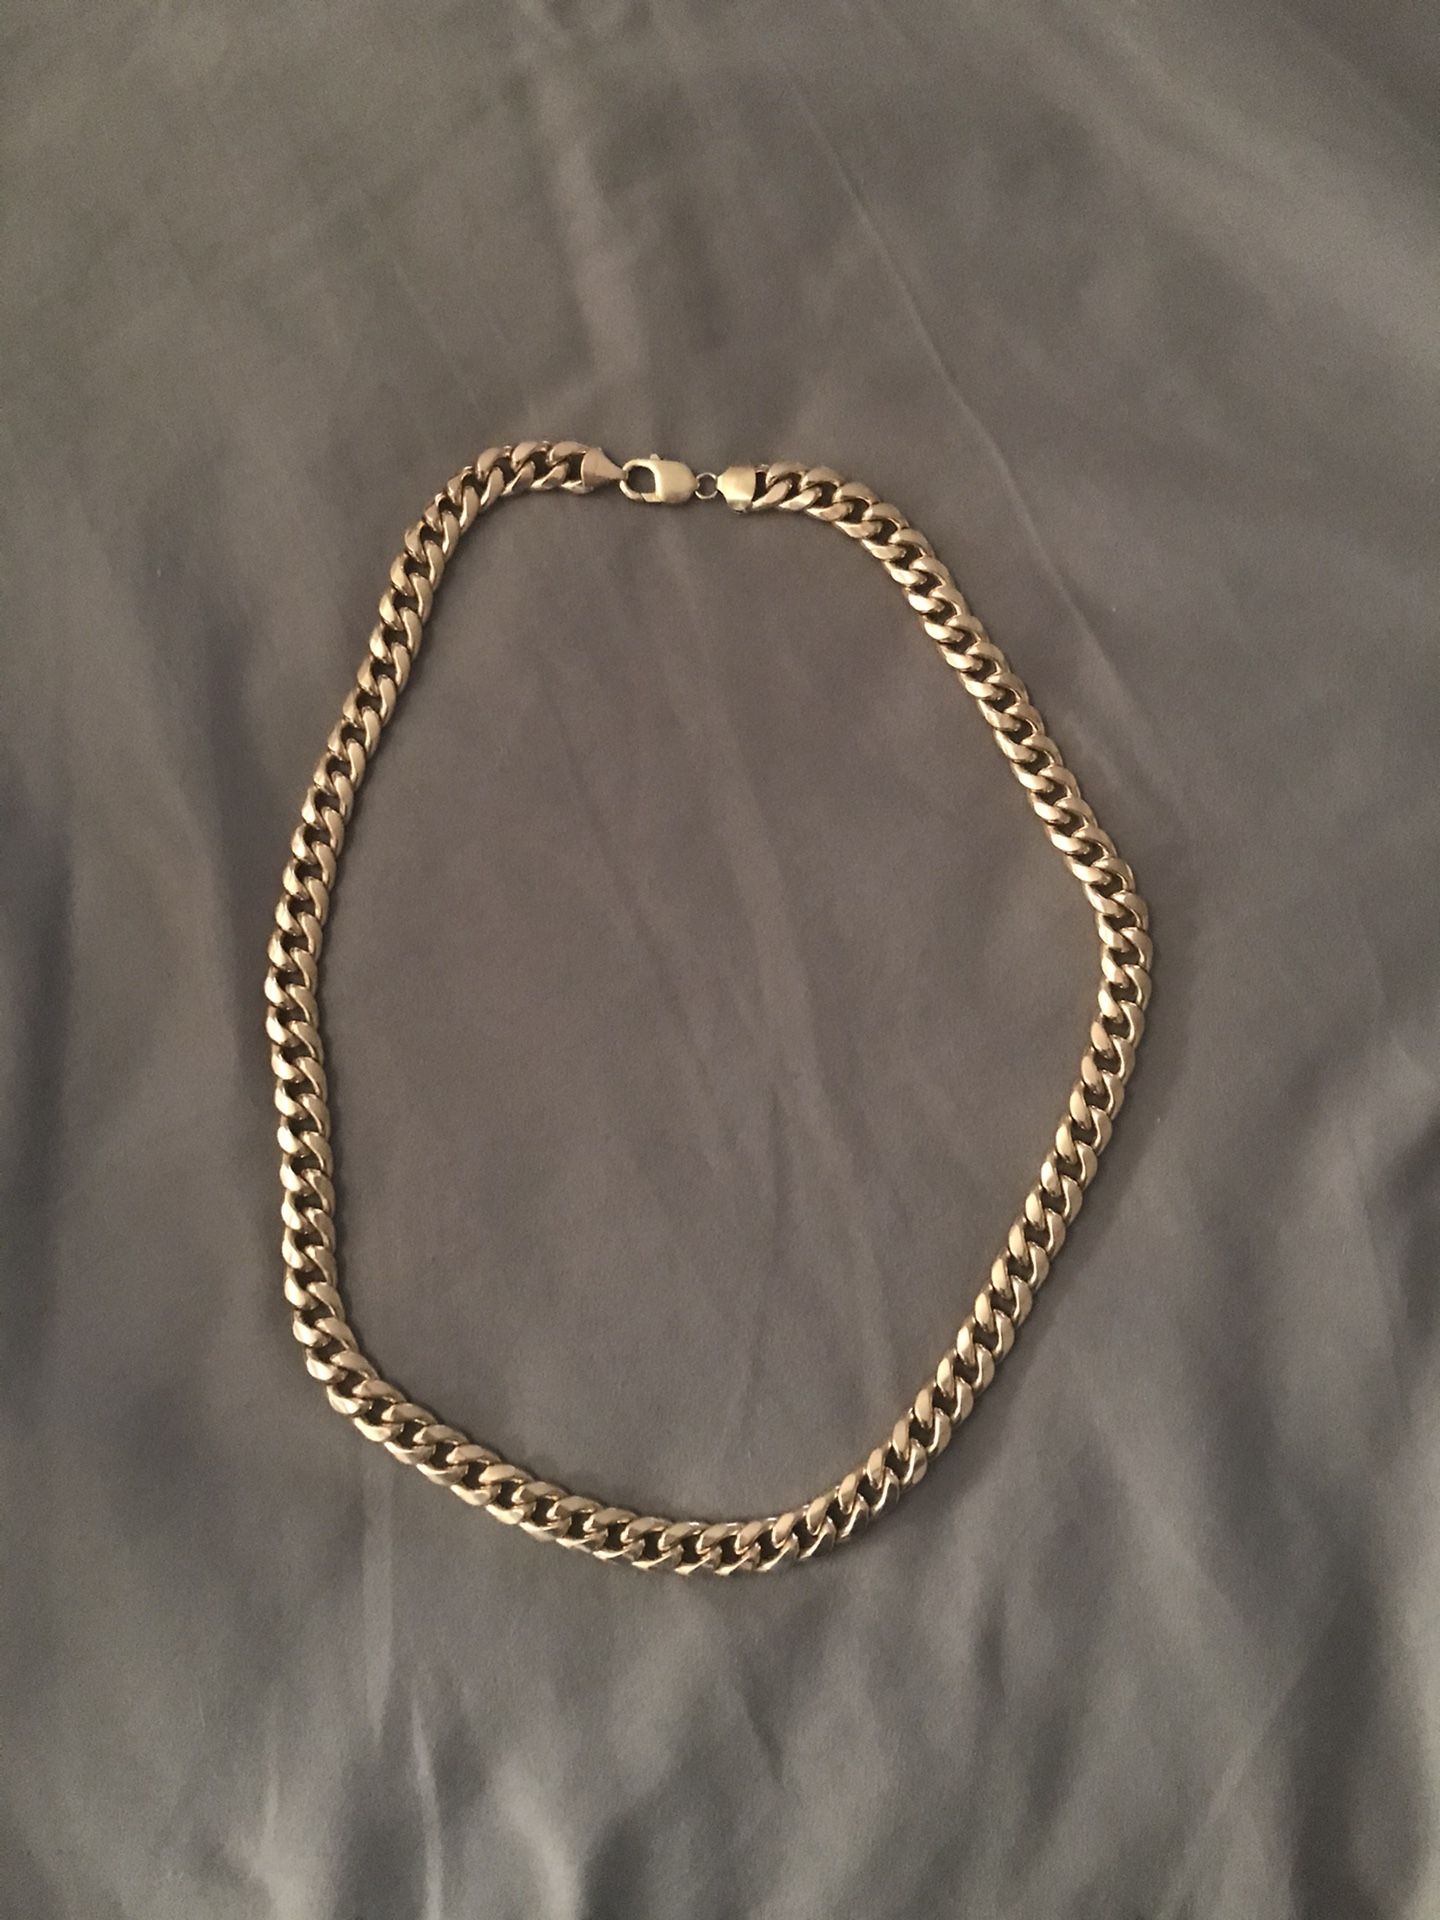 10k Gold chain